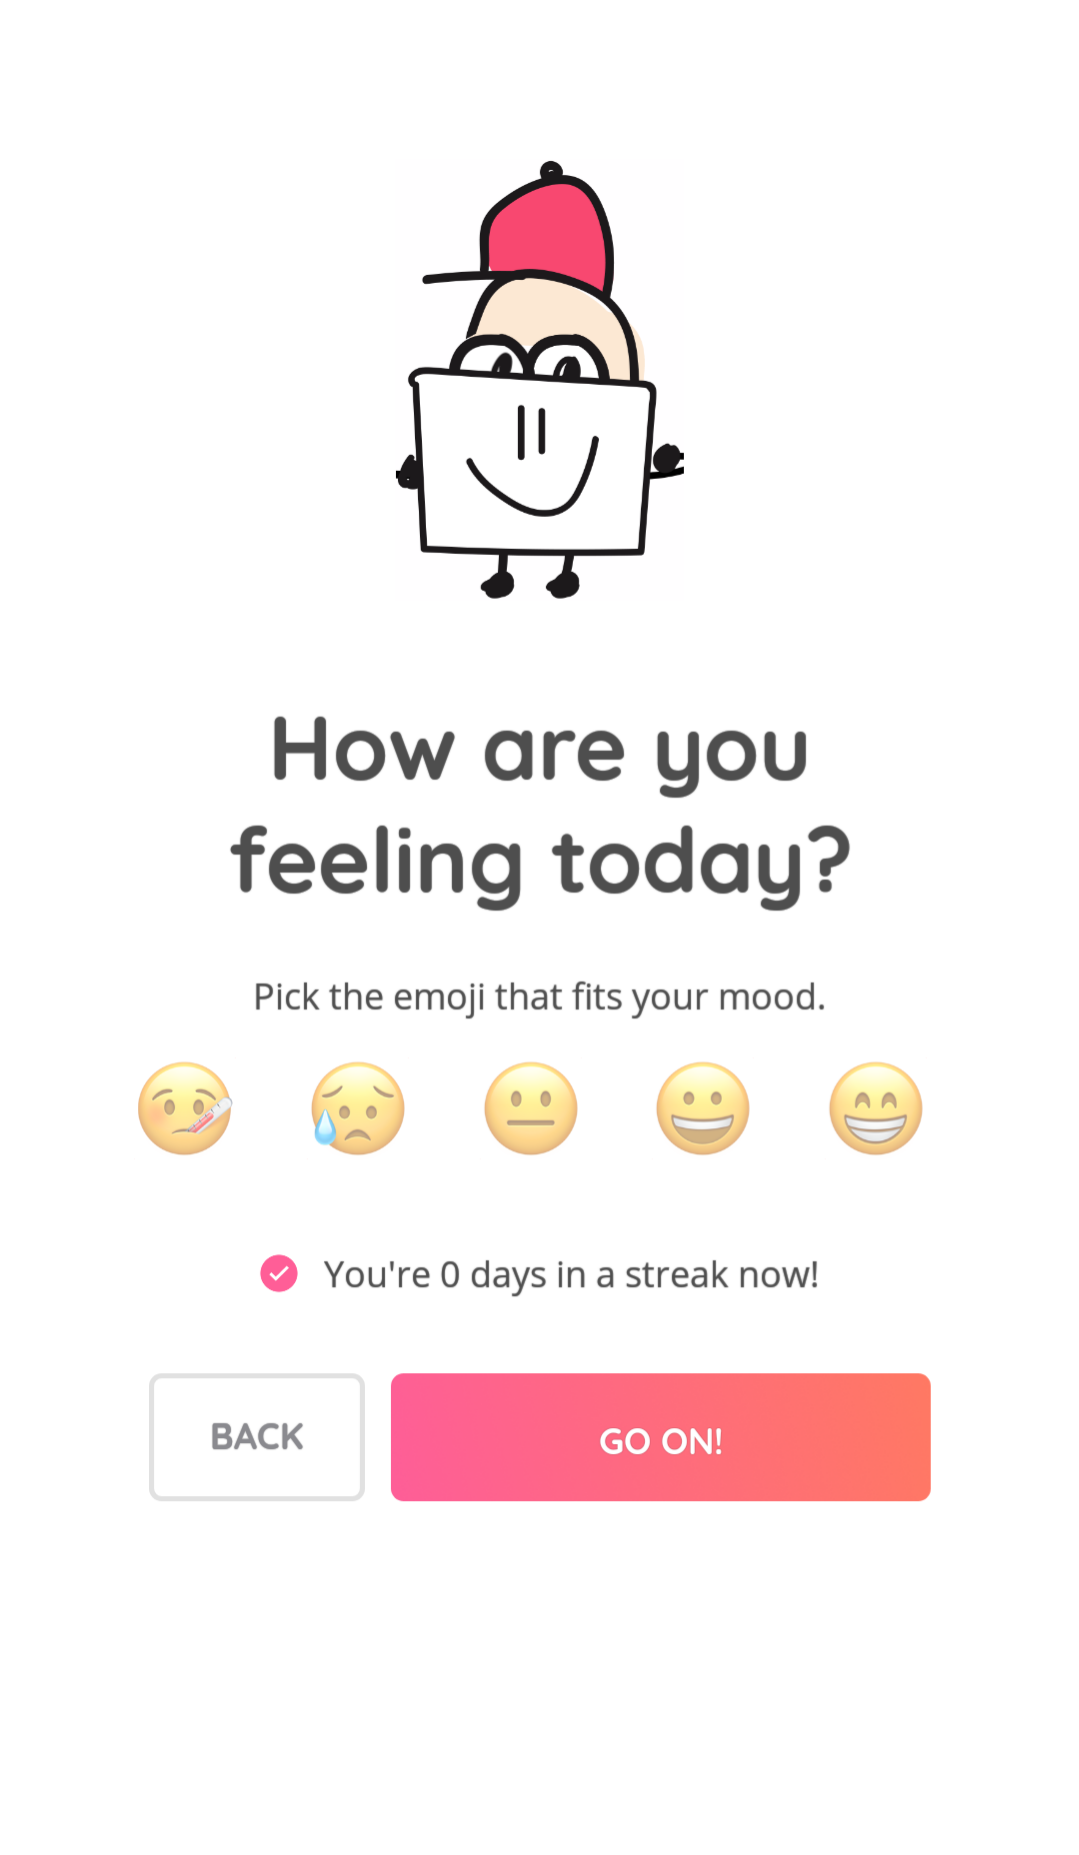 Productivity app Streaky tracks your mood as well